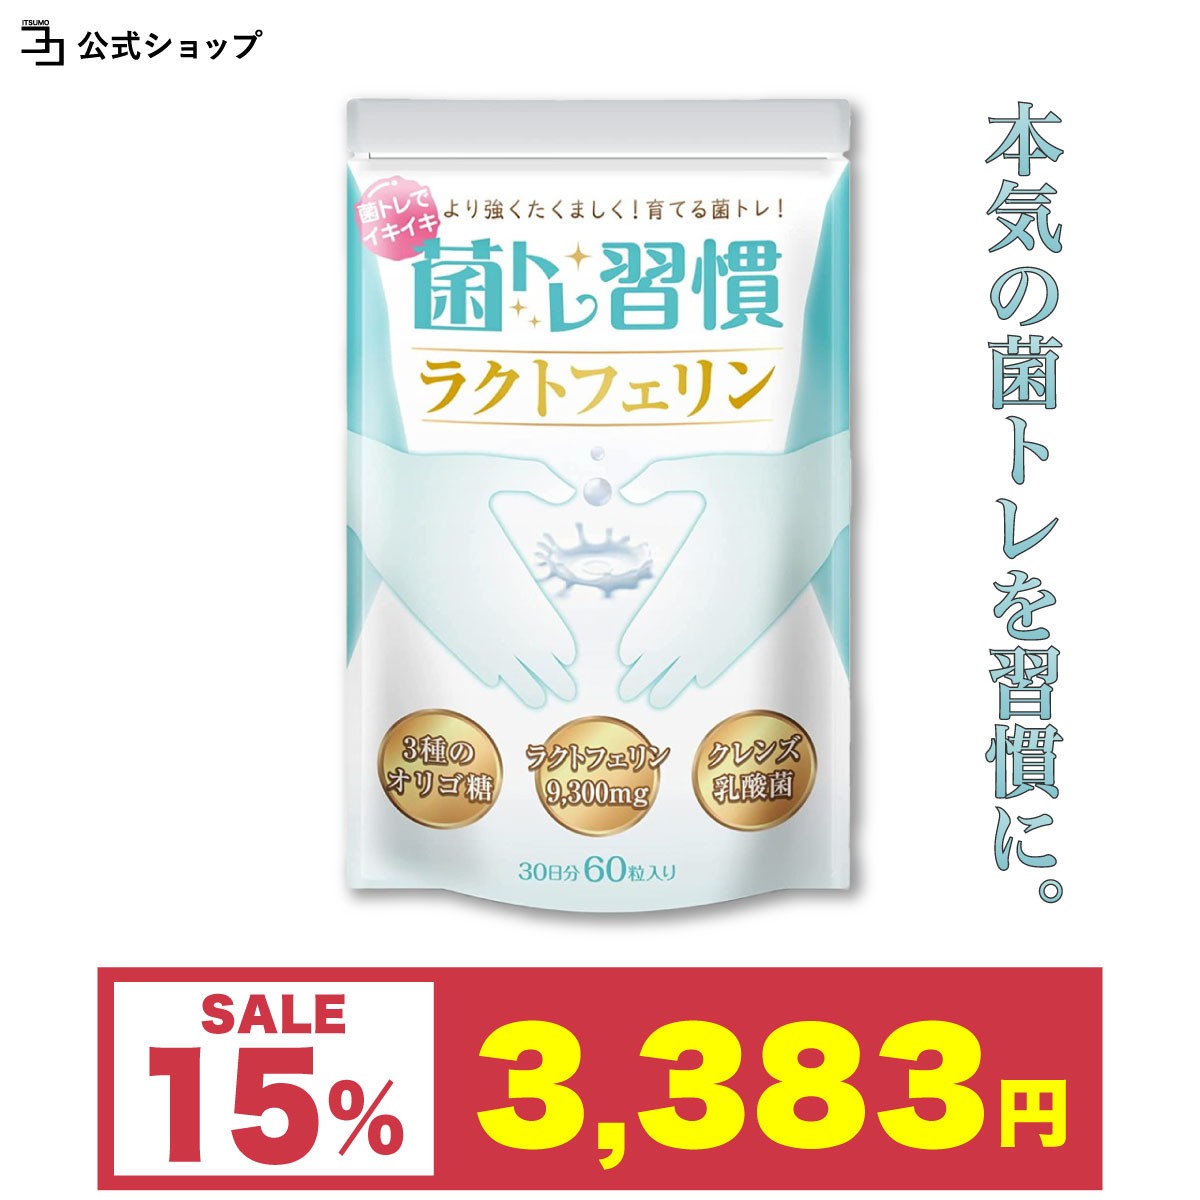 15OFF 期間限定セール〜ラクトフェリン サプリ 牛乳6L分 9,300mg配合